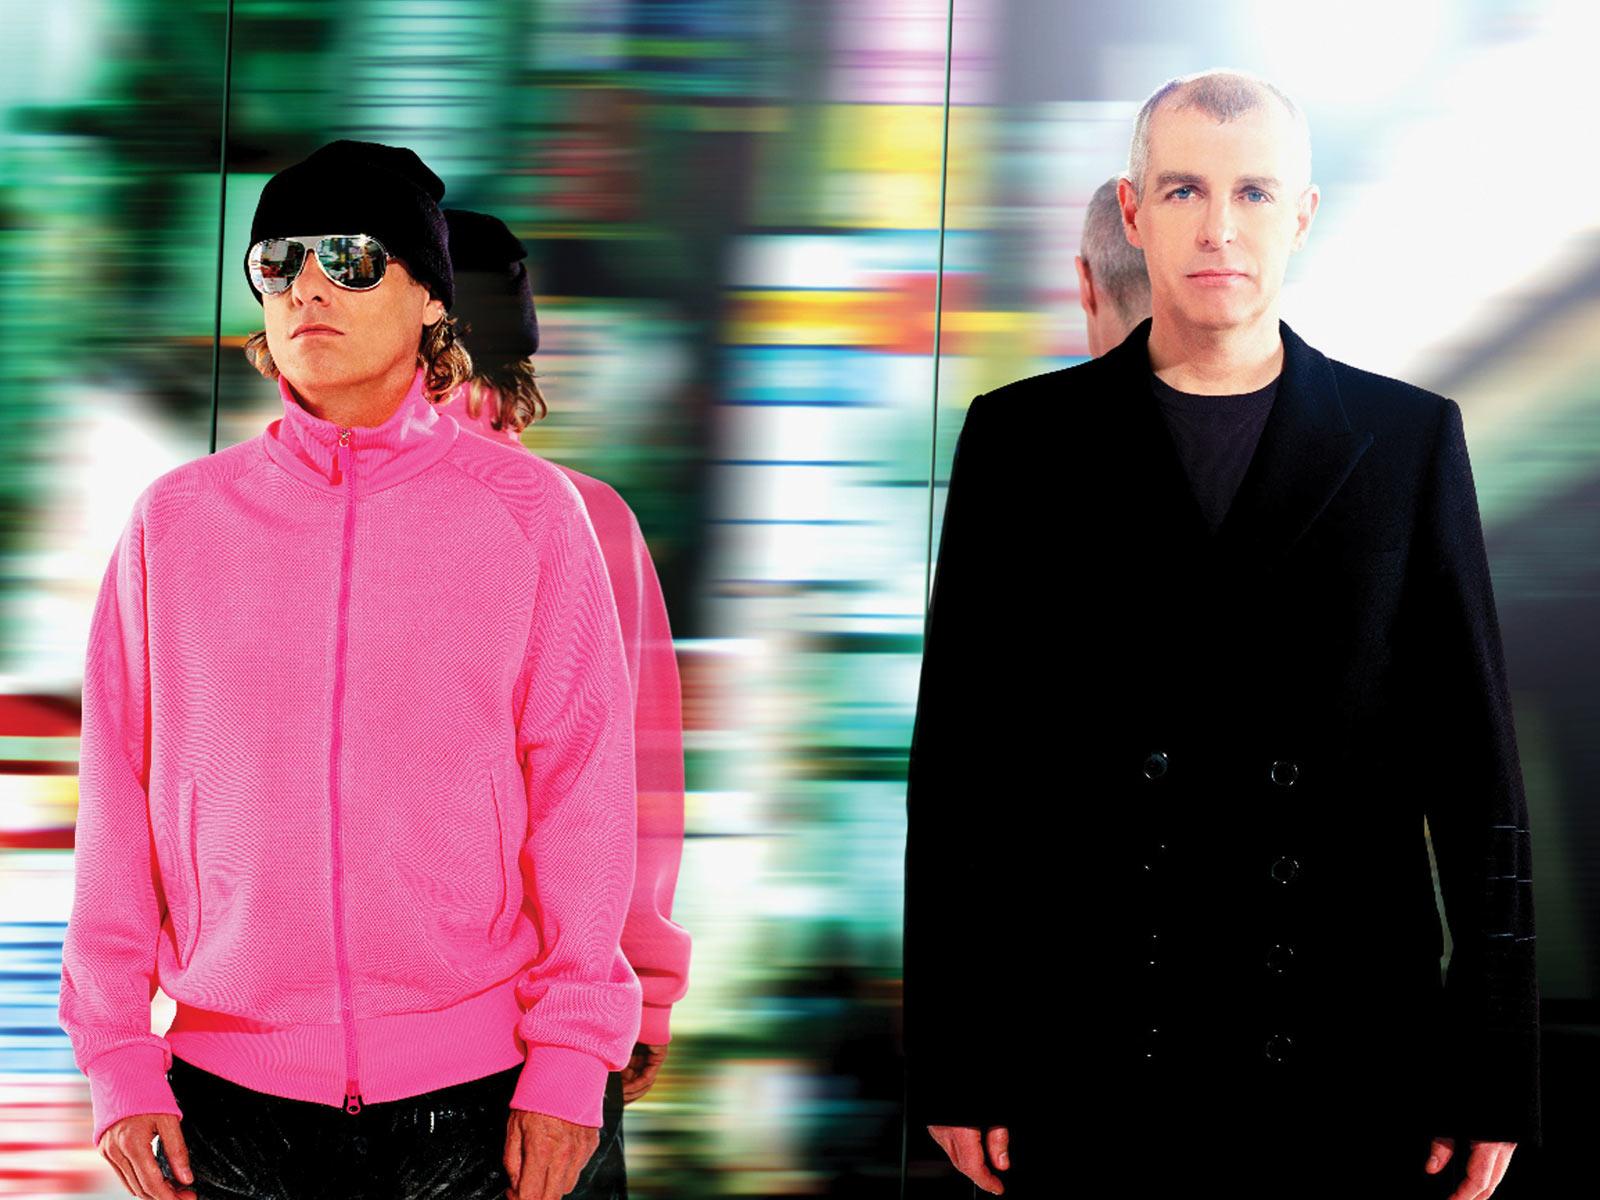 Kobalt Label Services snaps up Pet Shop Boys